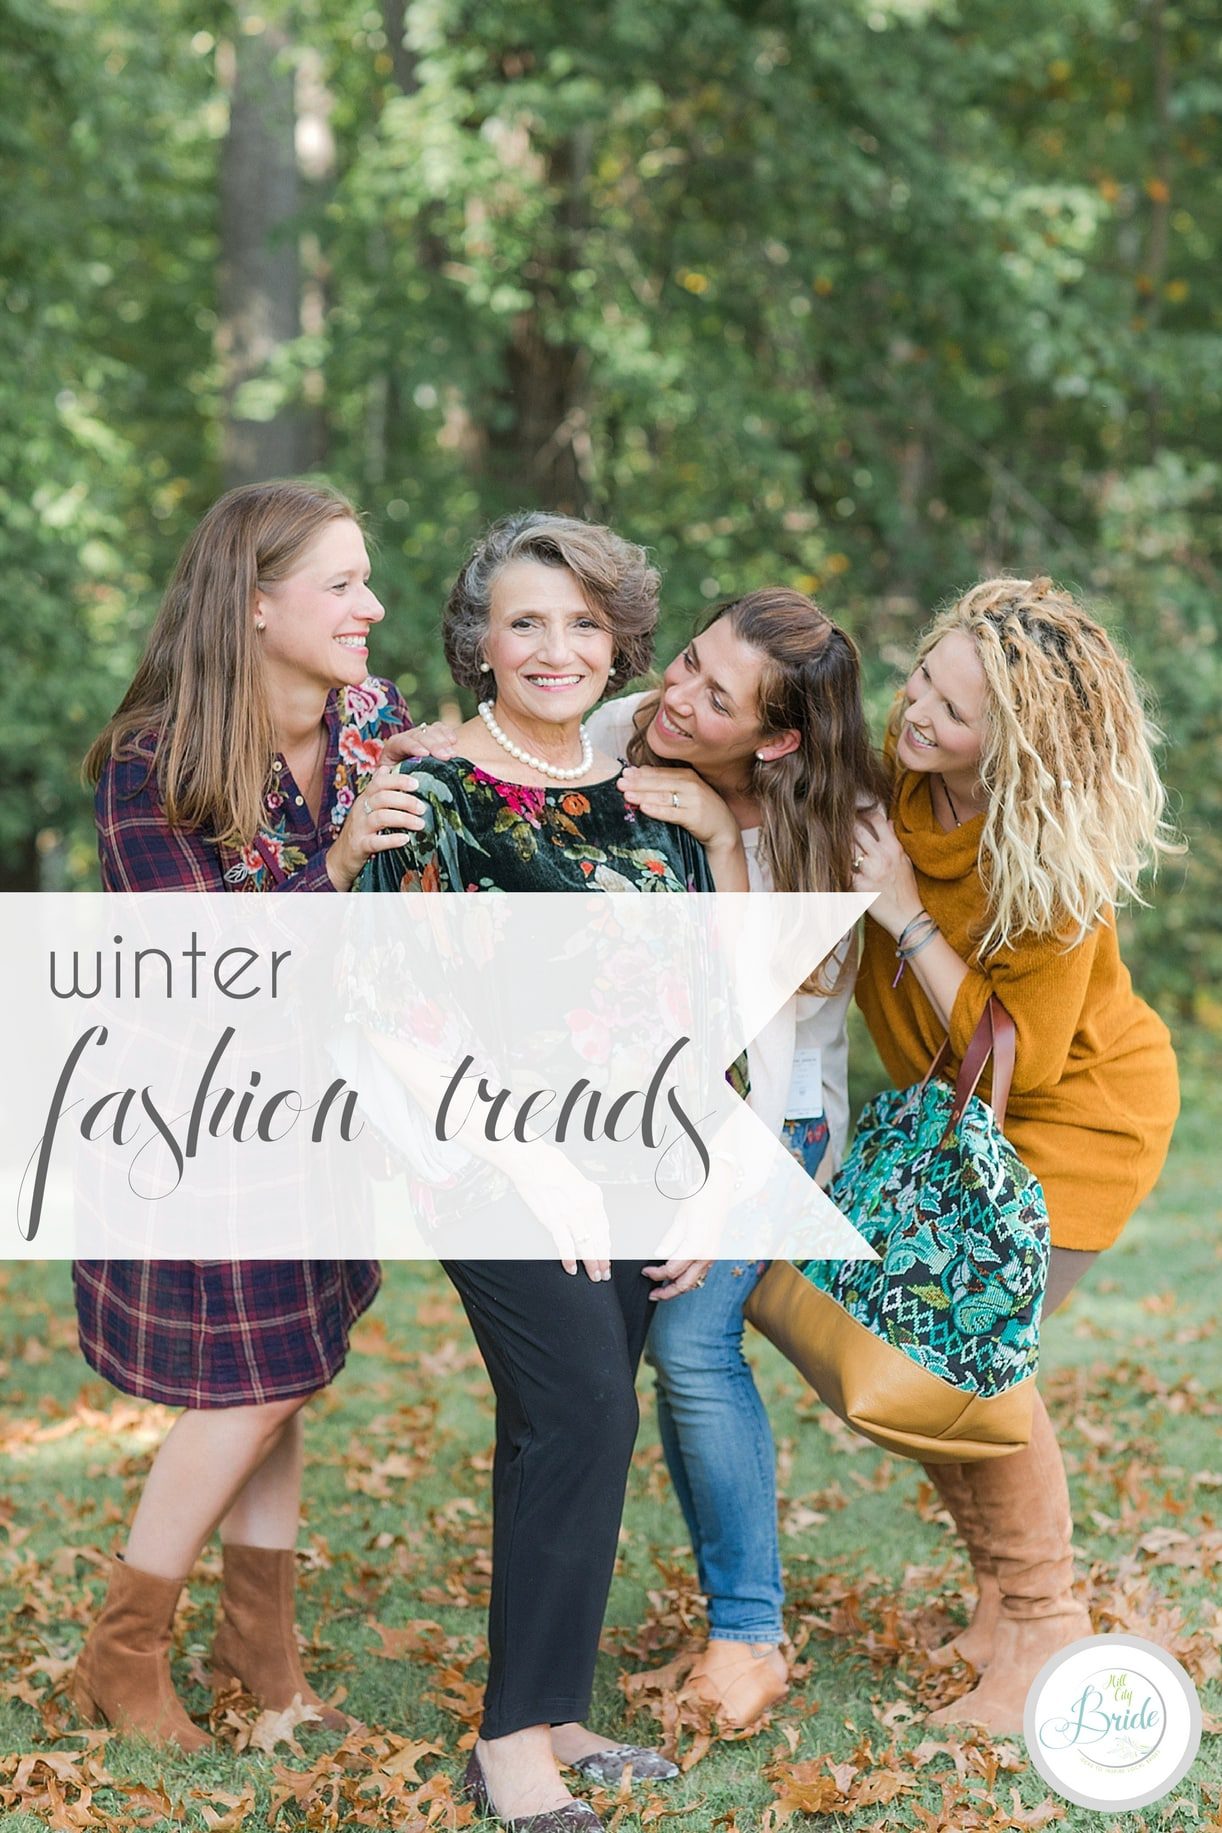 Winter Fashion Trends | Hill City Bride Lynchburg Virginia Wedding Blog